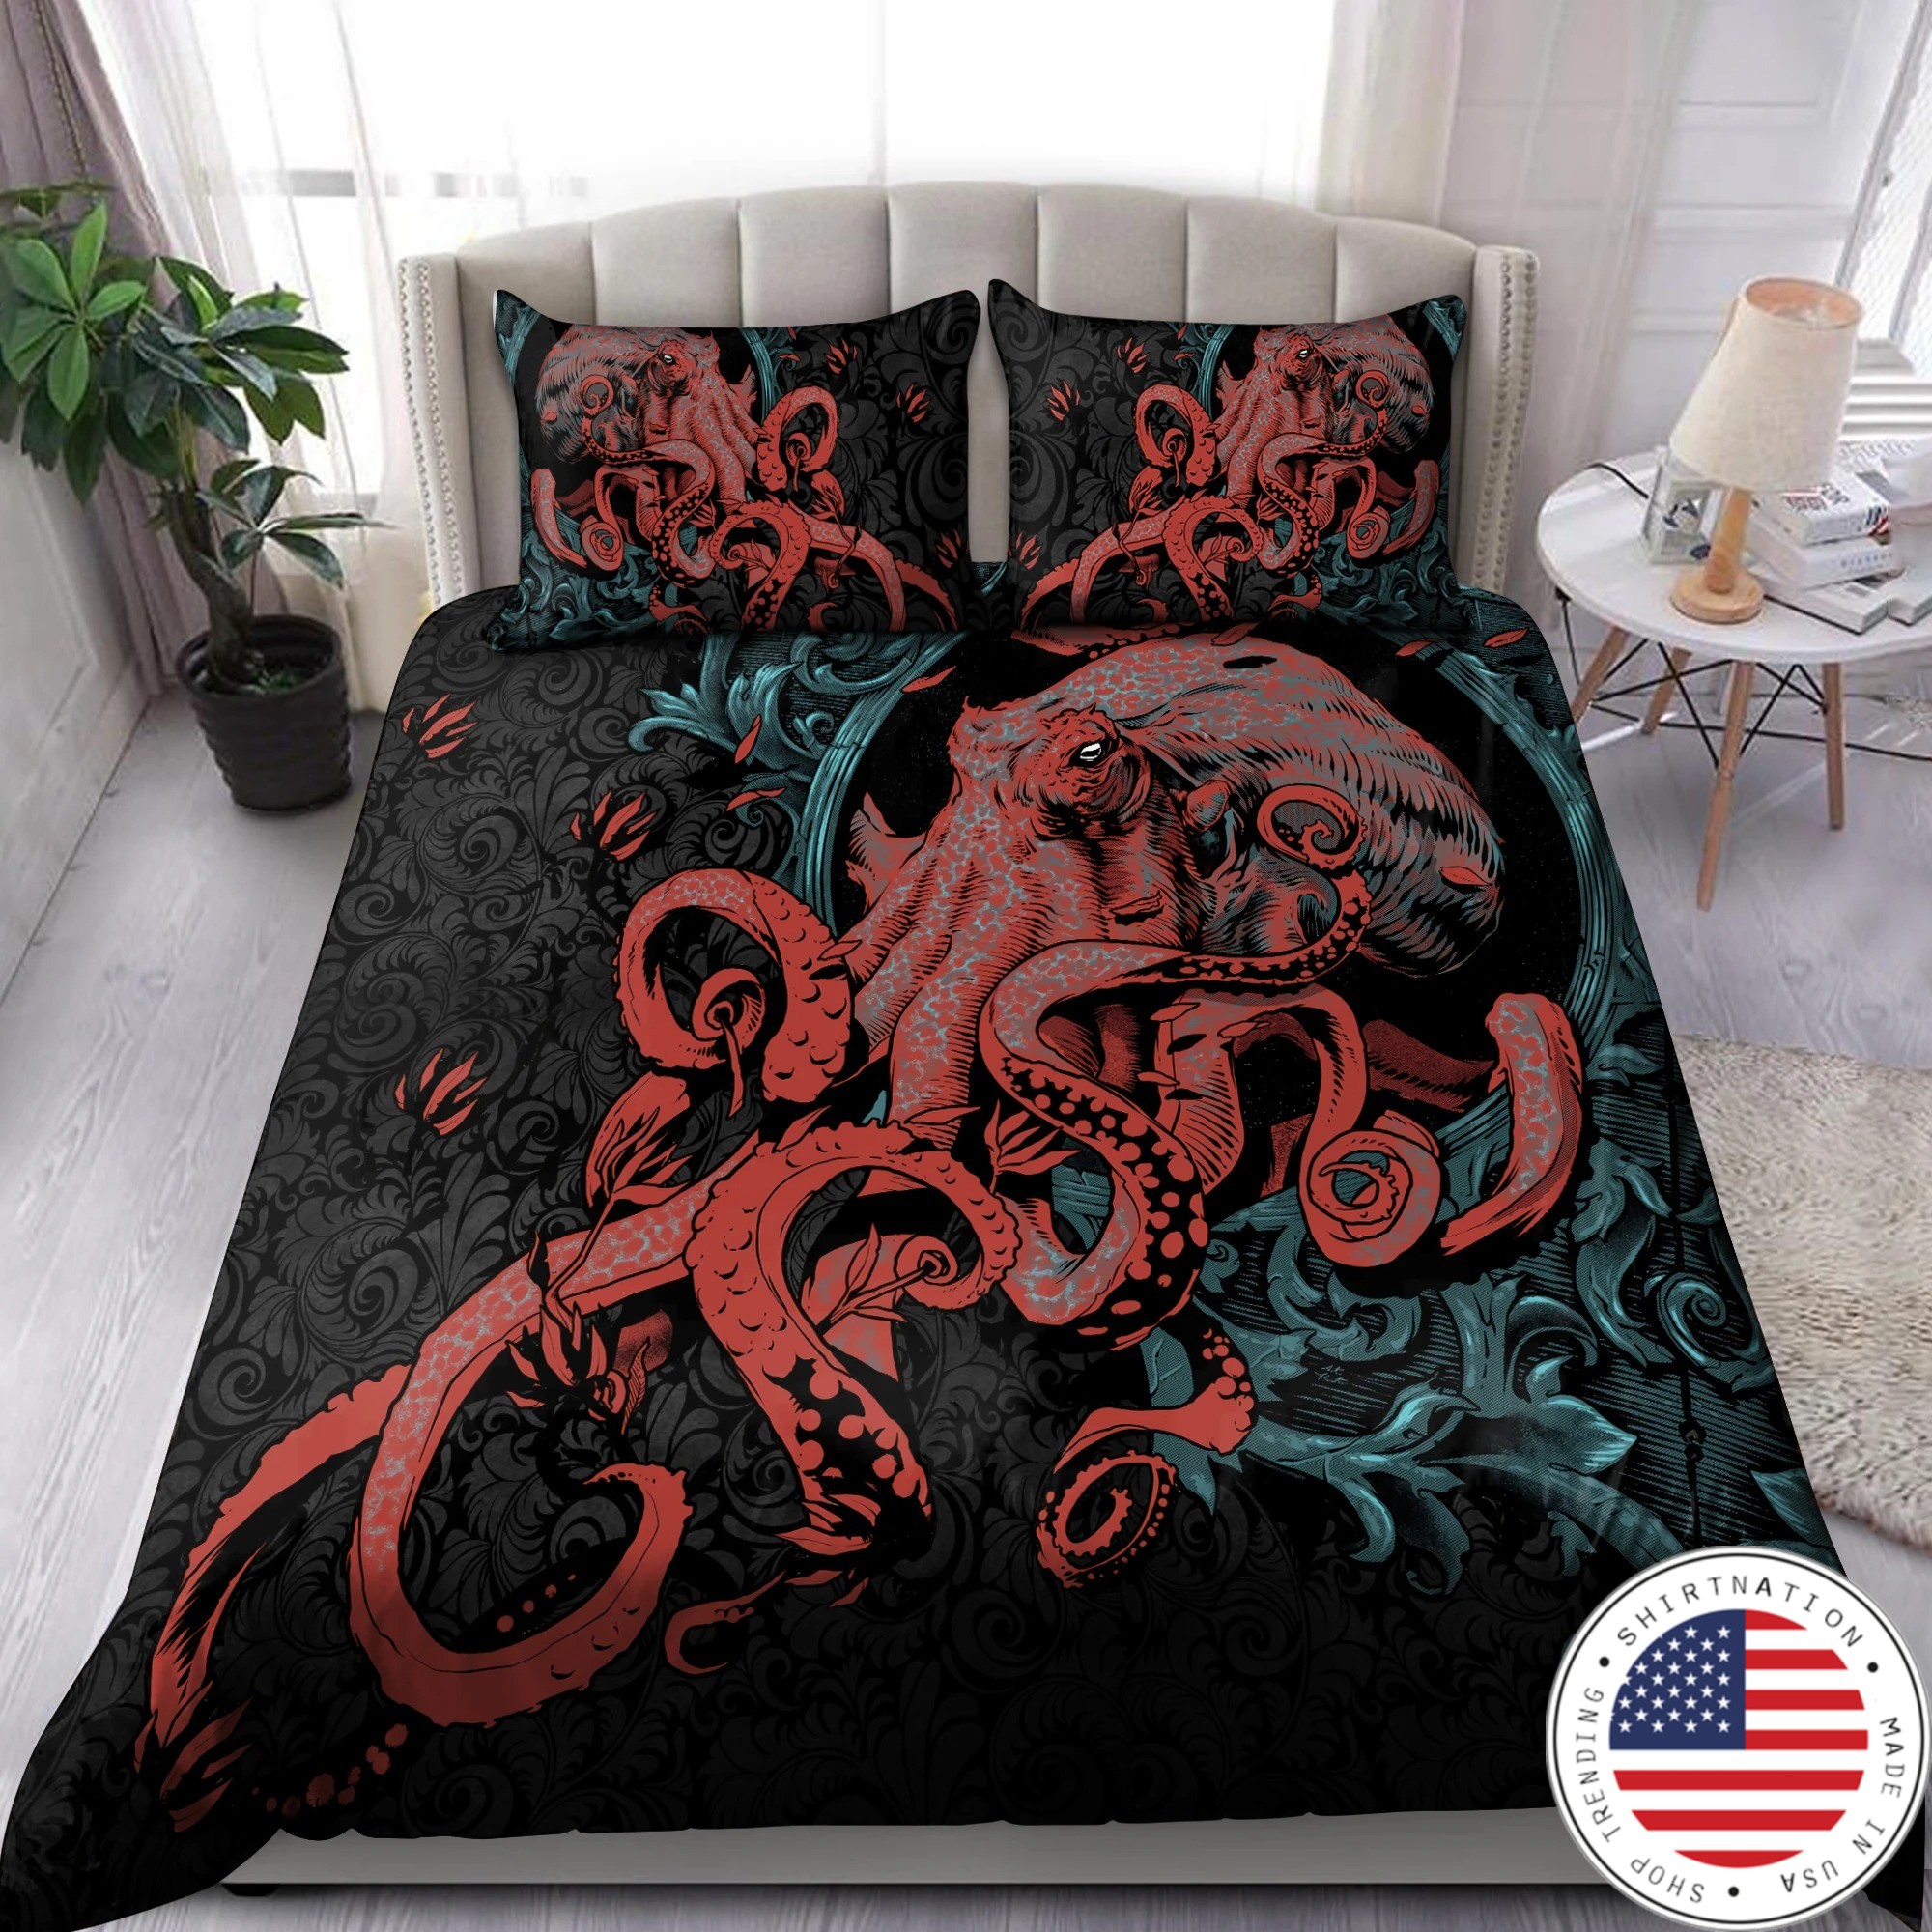 Octopus Gothic bedding set